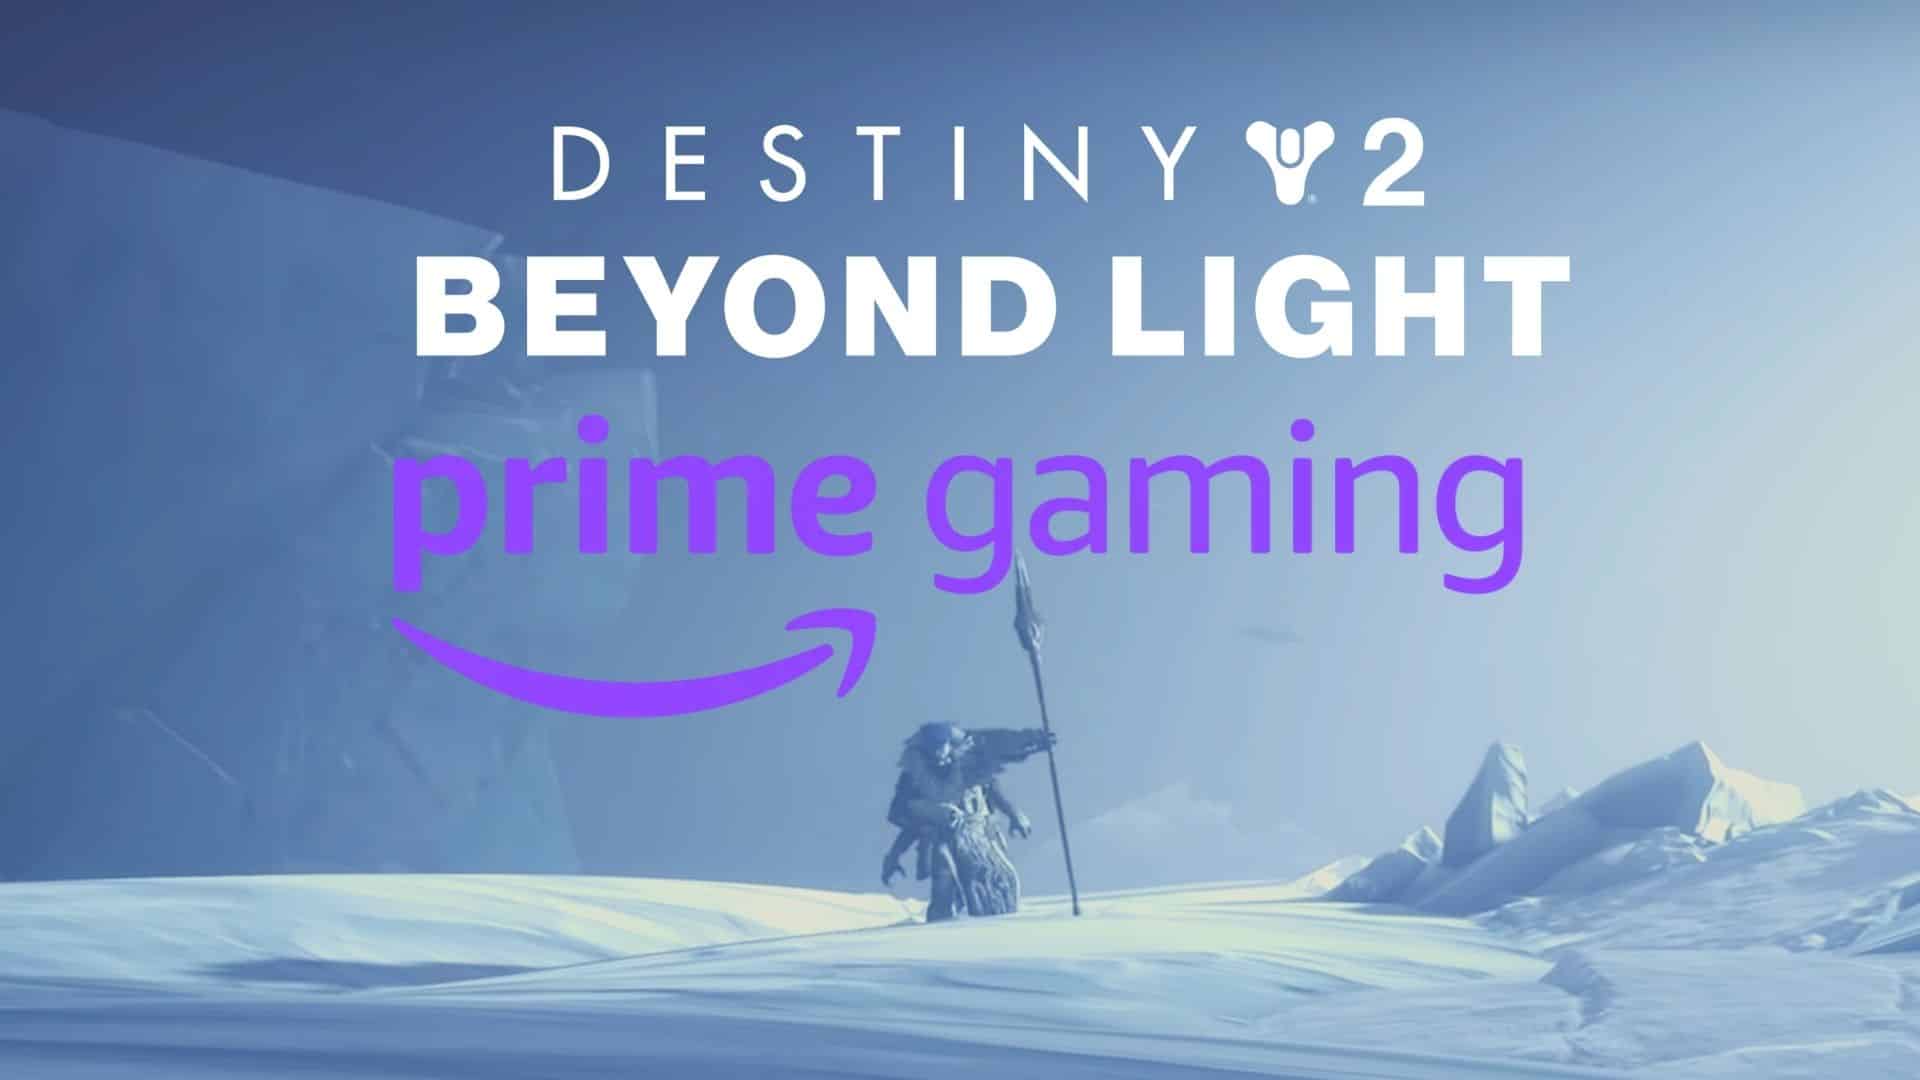 Destiny 2 Prime Gaming Rewards